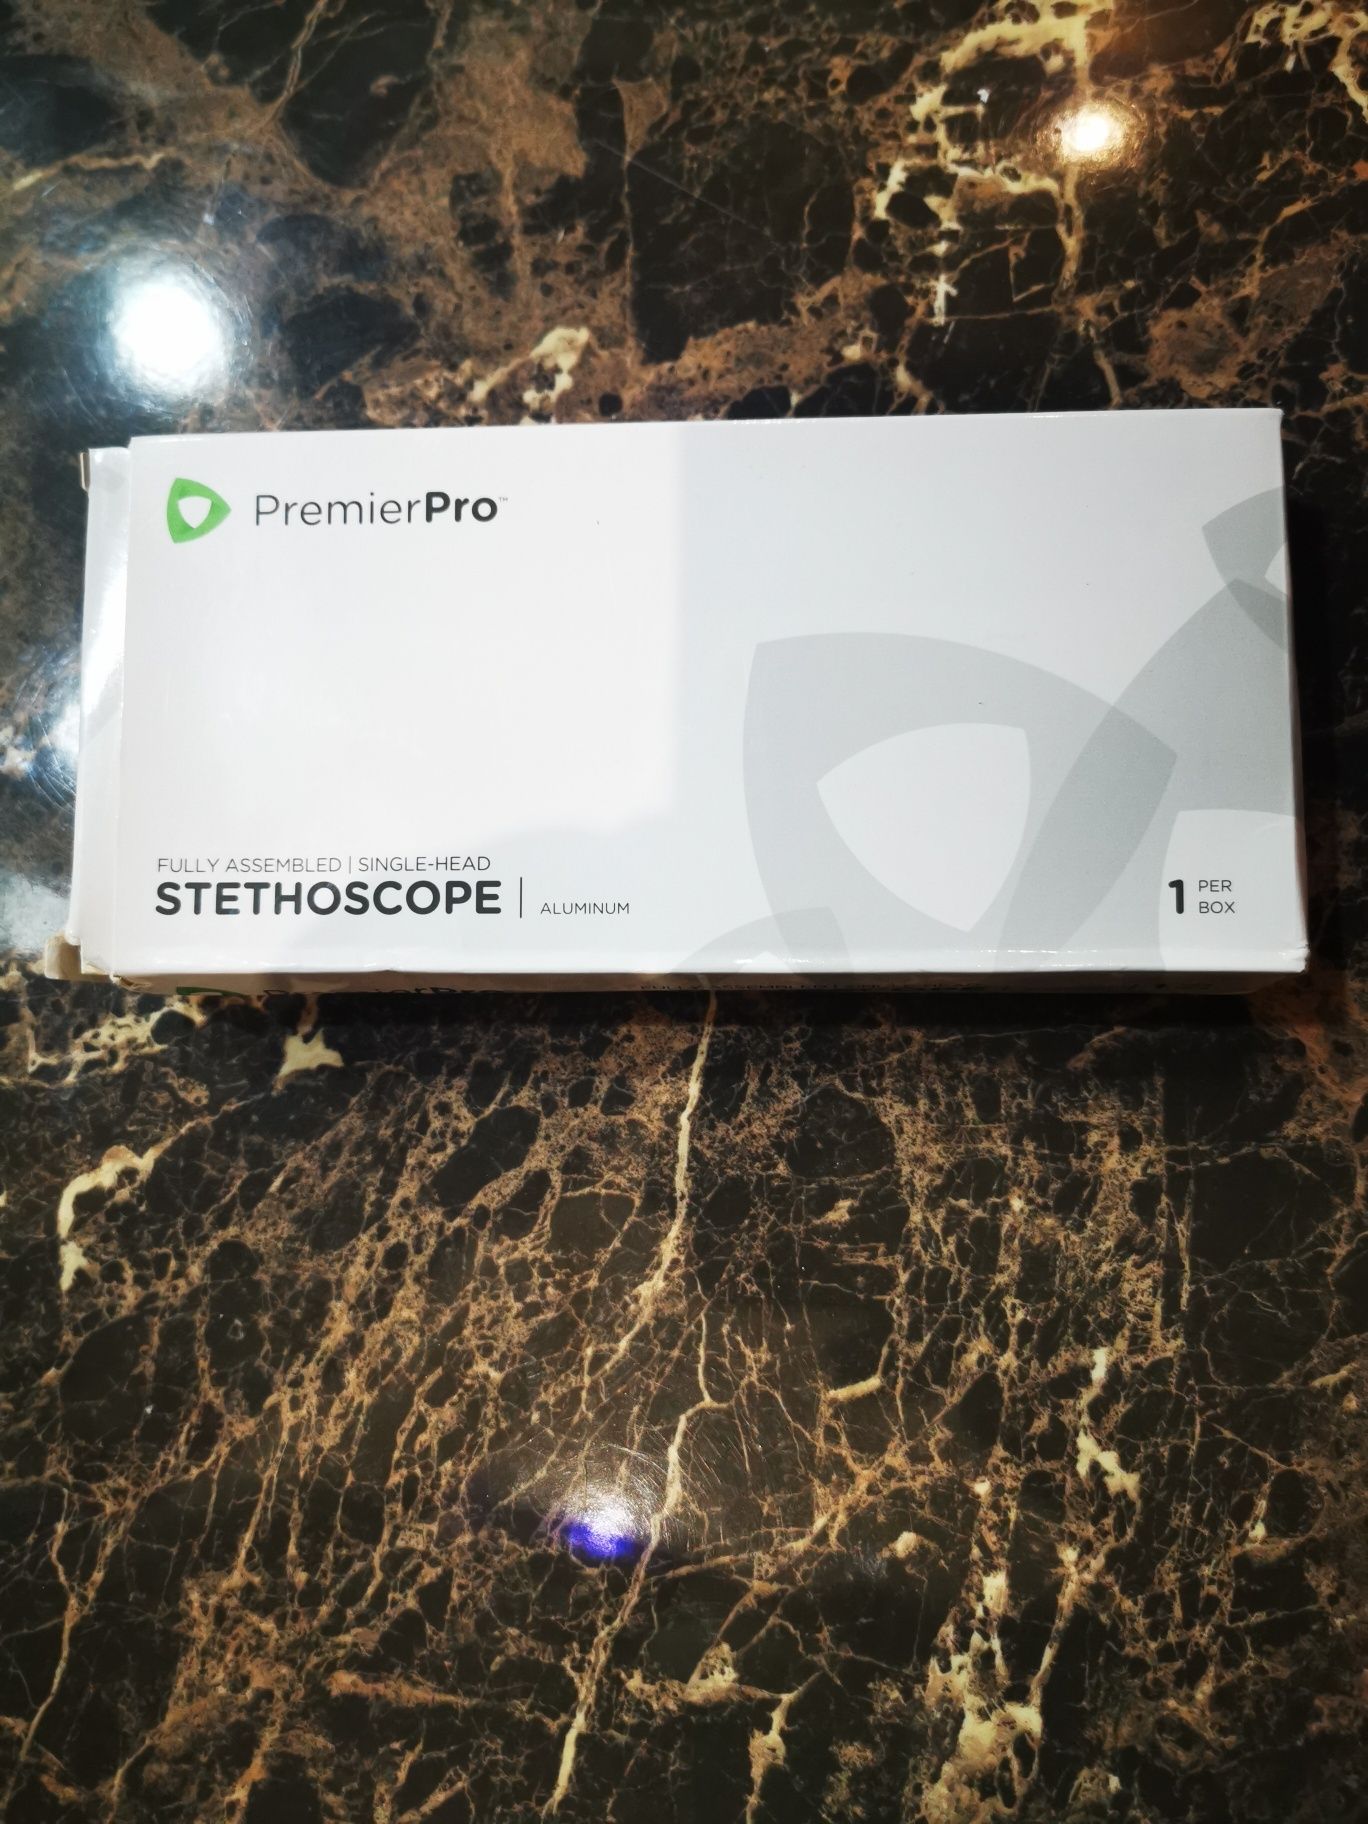 PremierPro Single-головка стетоскоп 6340